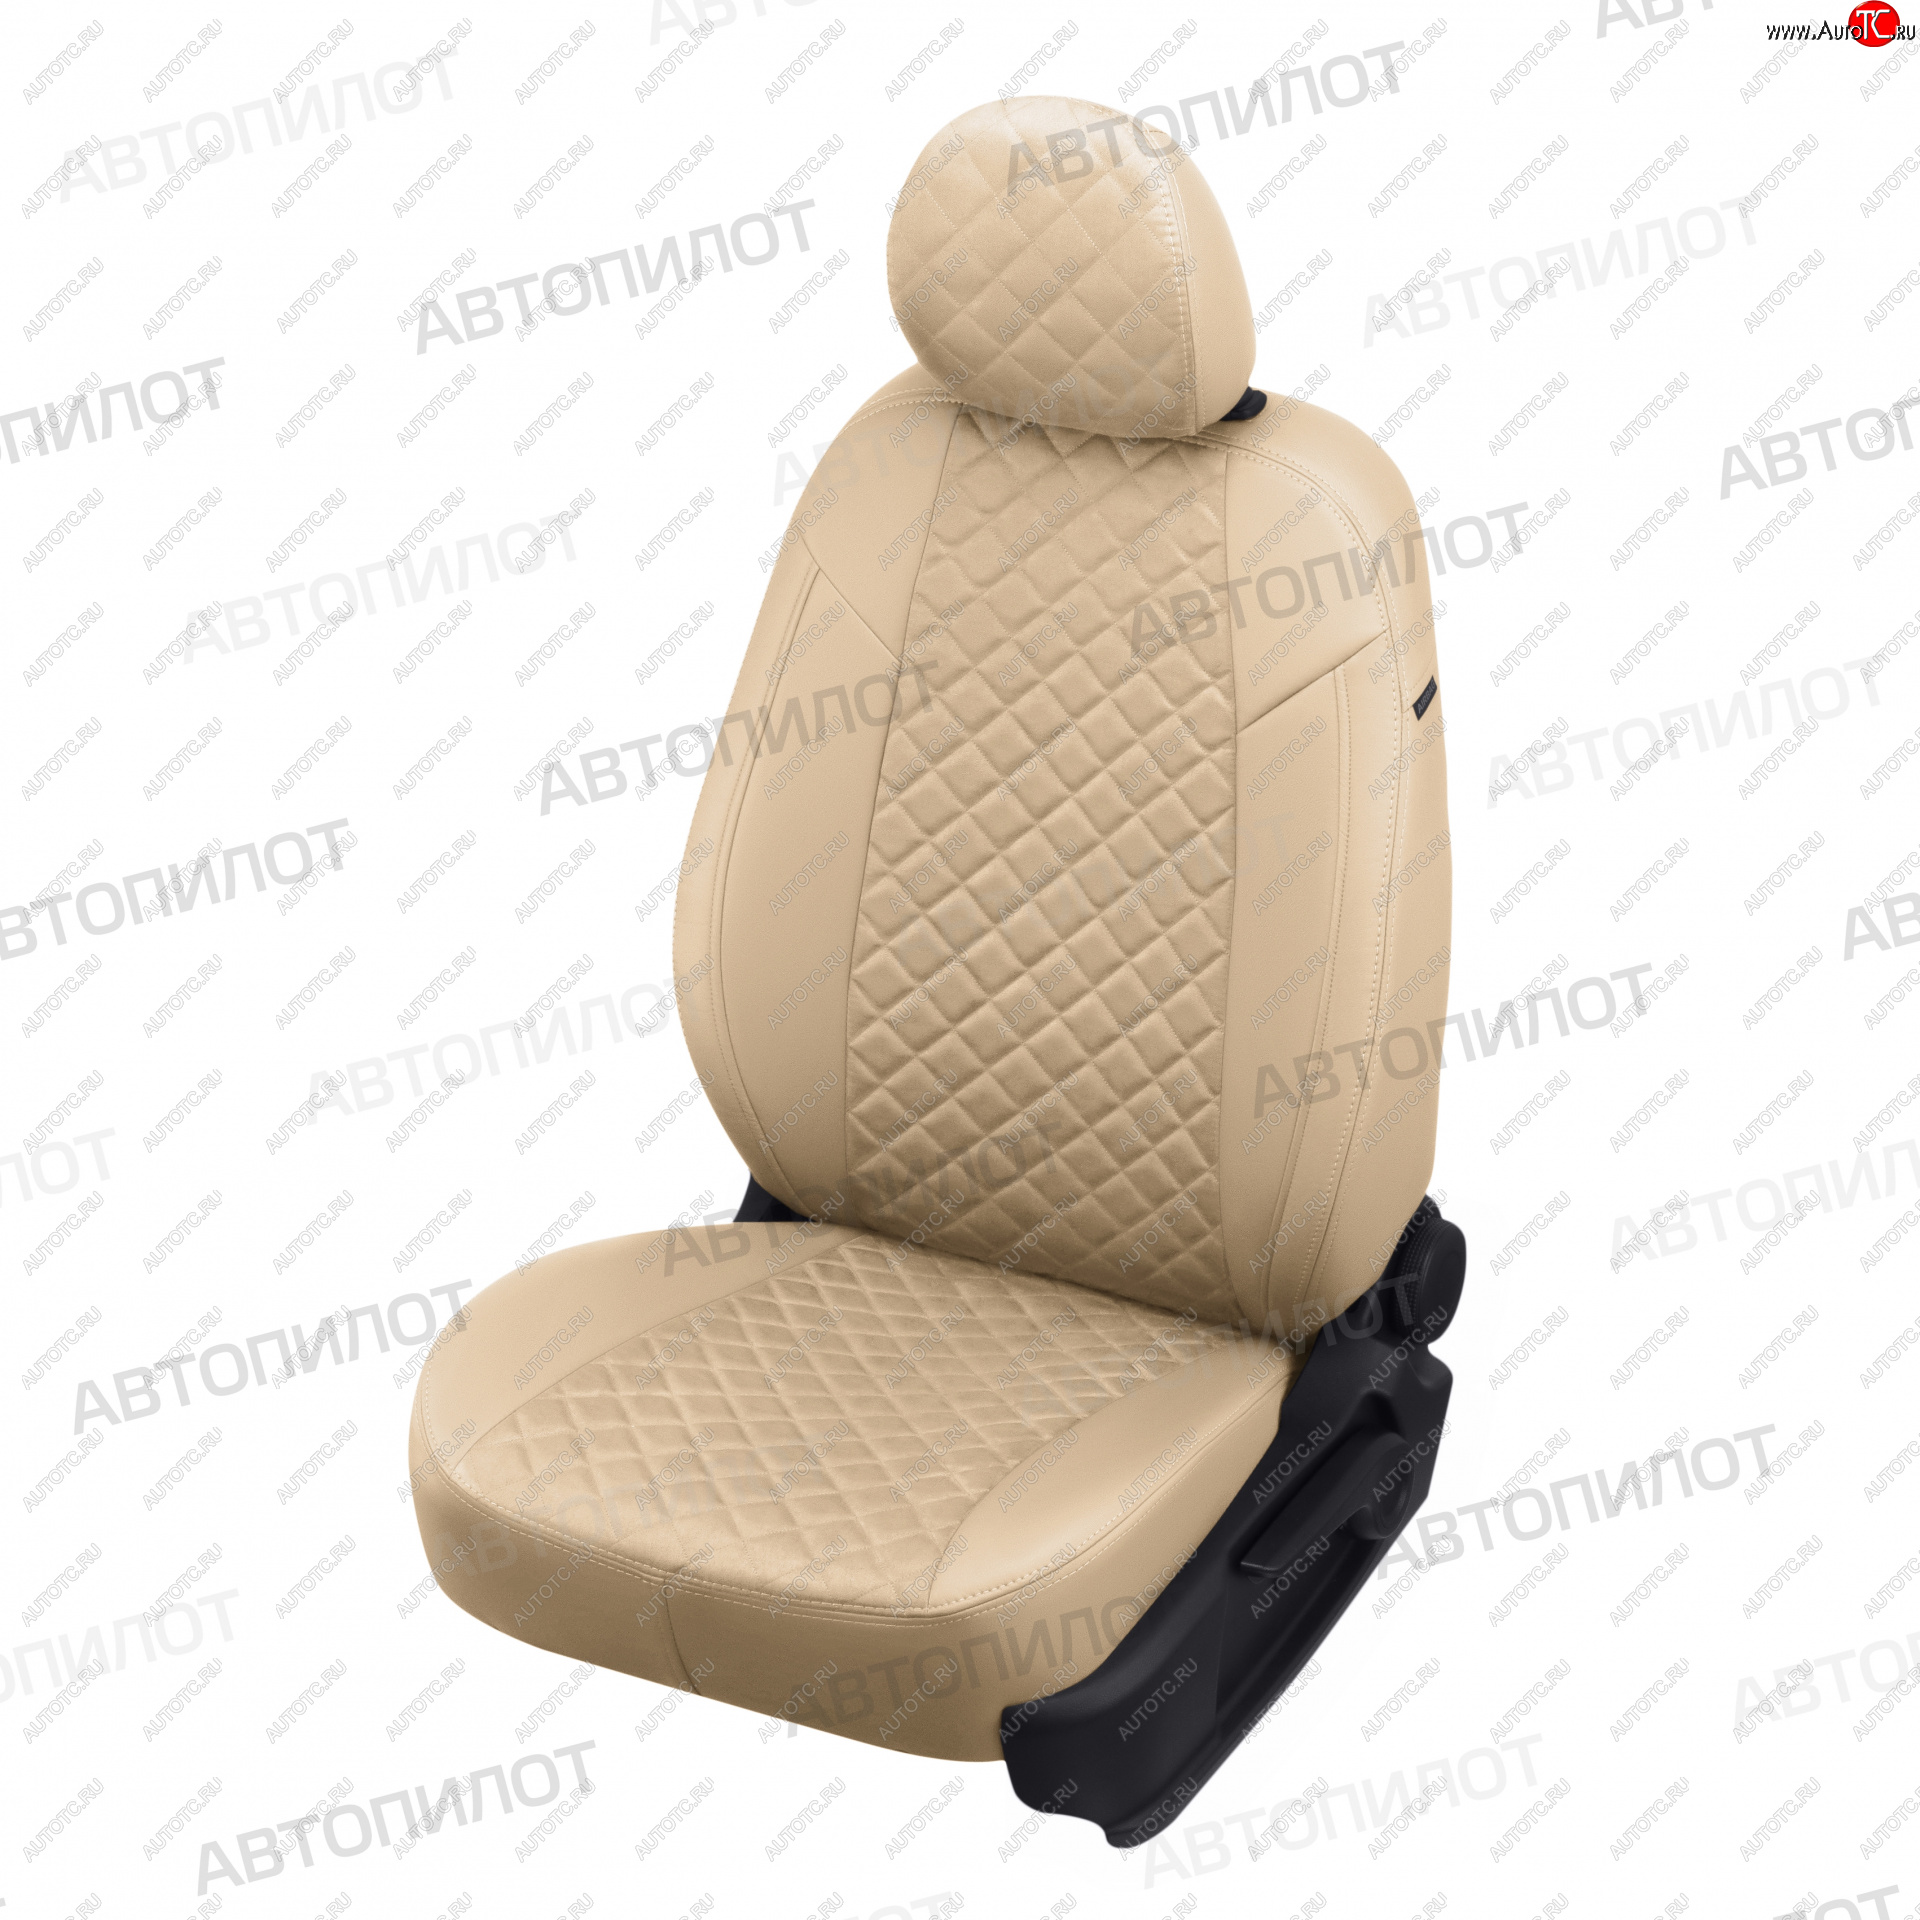 13 999 р. Чехлы сидений (экокожа/алькантара) Автопилот Ромб  Hyundai Santa Fe  1 (2000-2012) (бежевый)